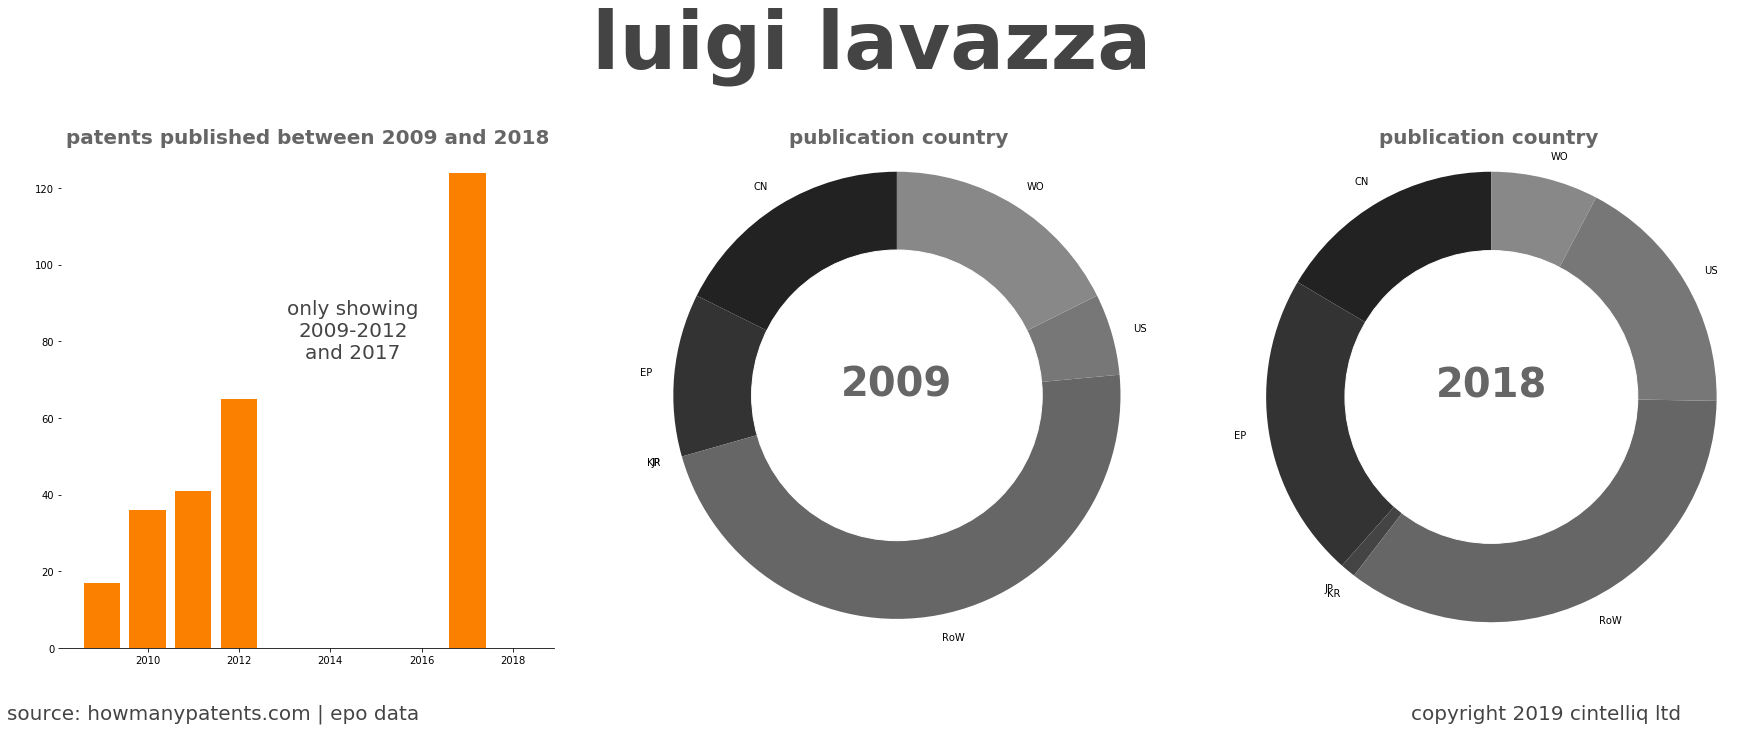 summary of patents for Luigi Lavazza